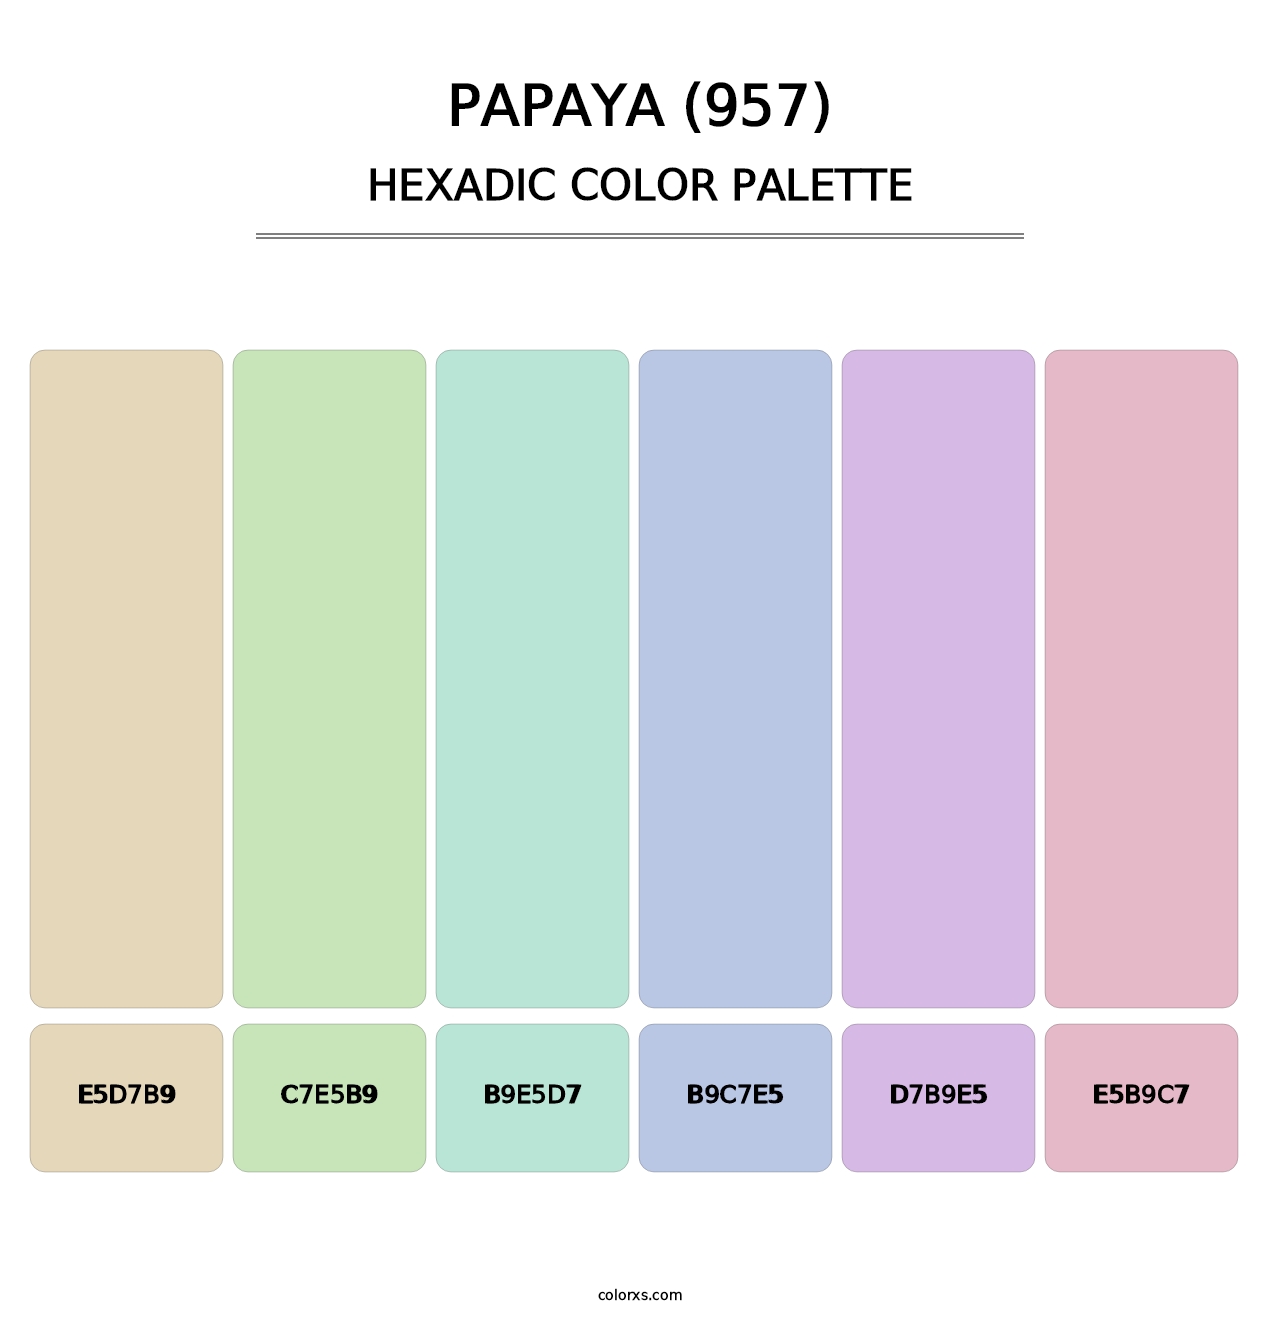 Papaya (957) - Hexadic Color Palette